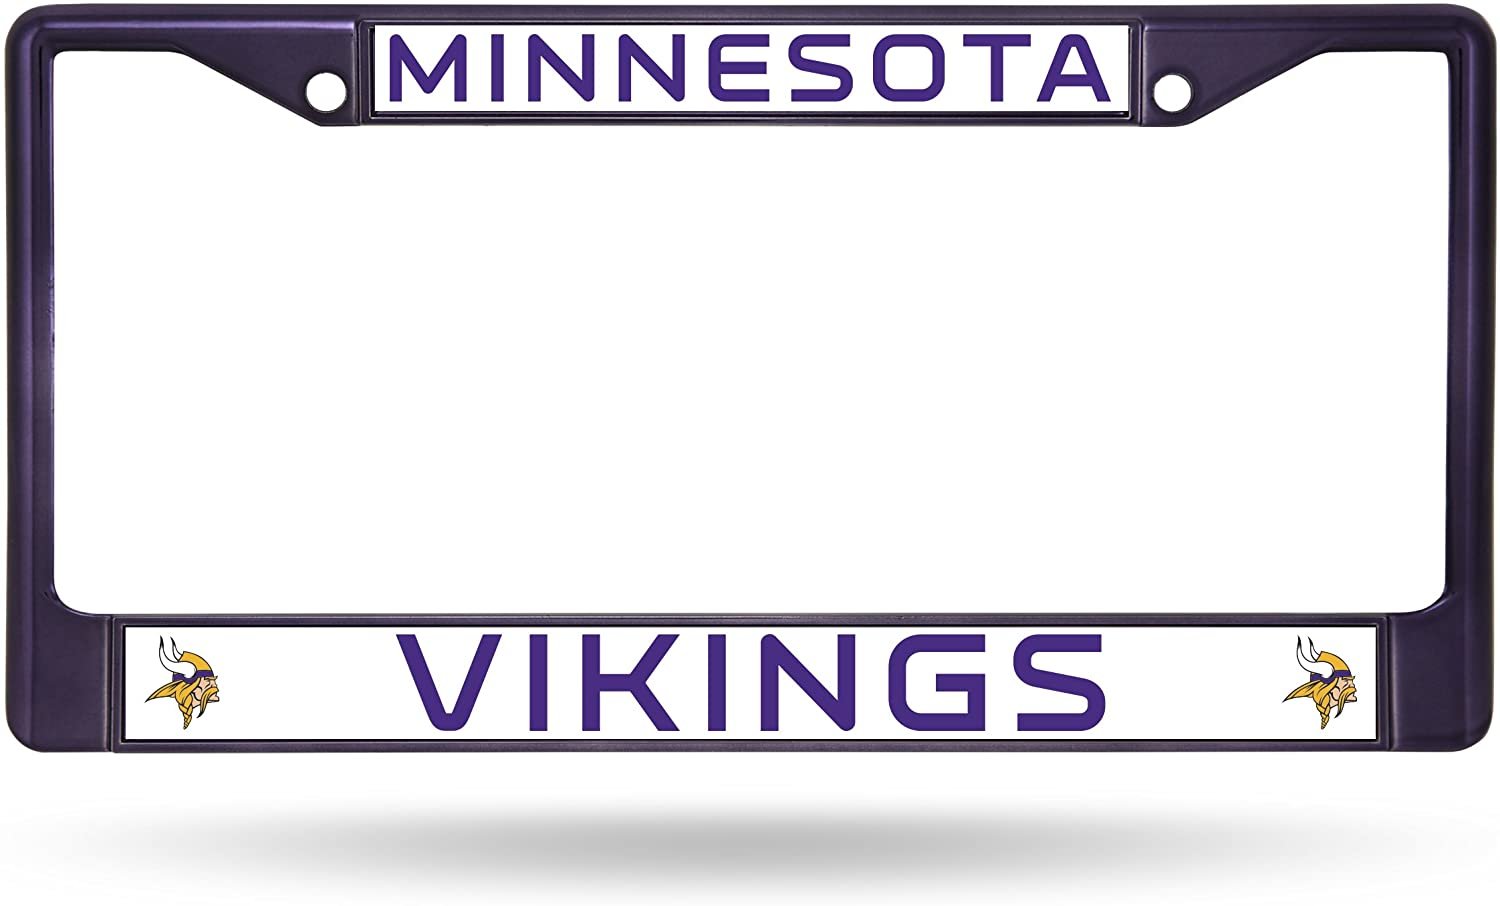 Minnesota Vikings Metal Color License Plate Frame Tag Cover